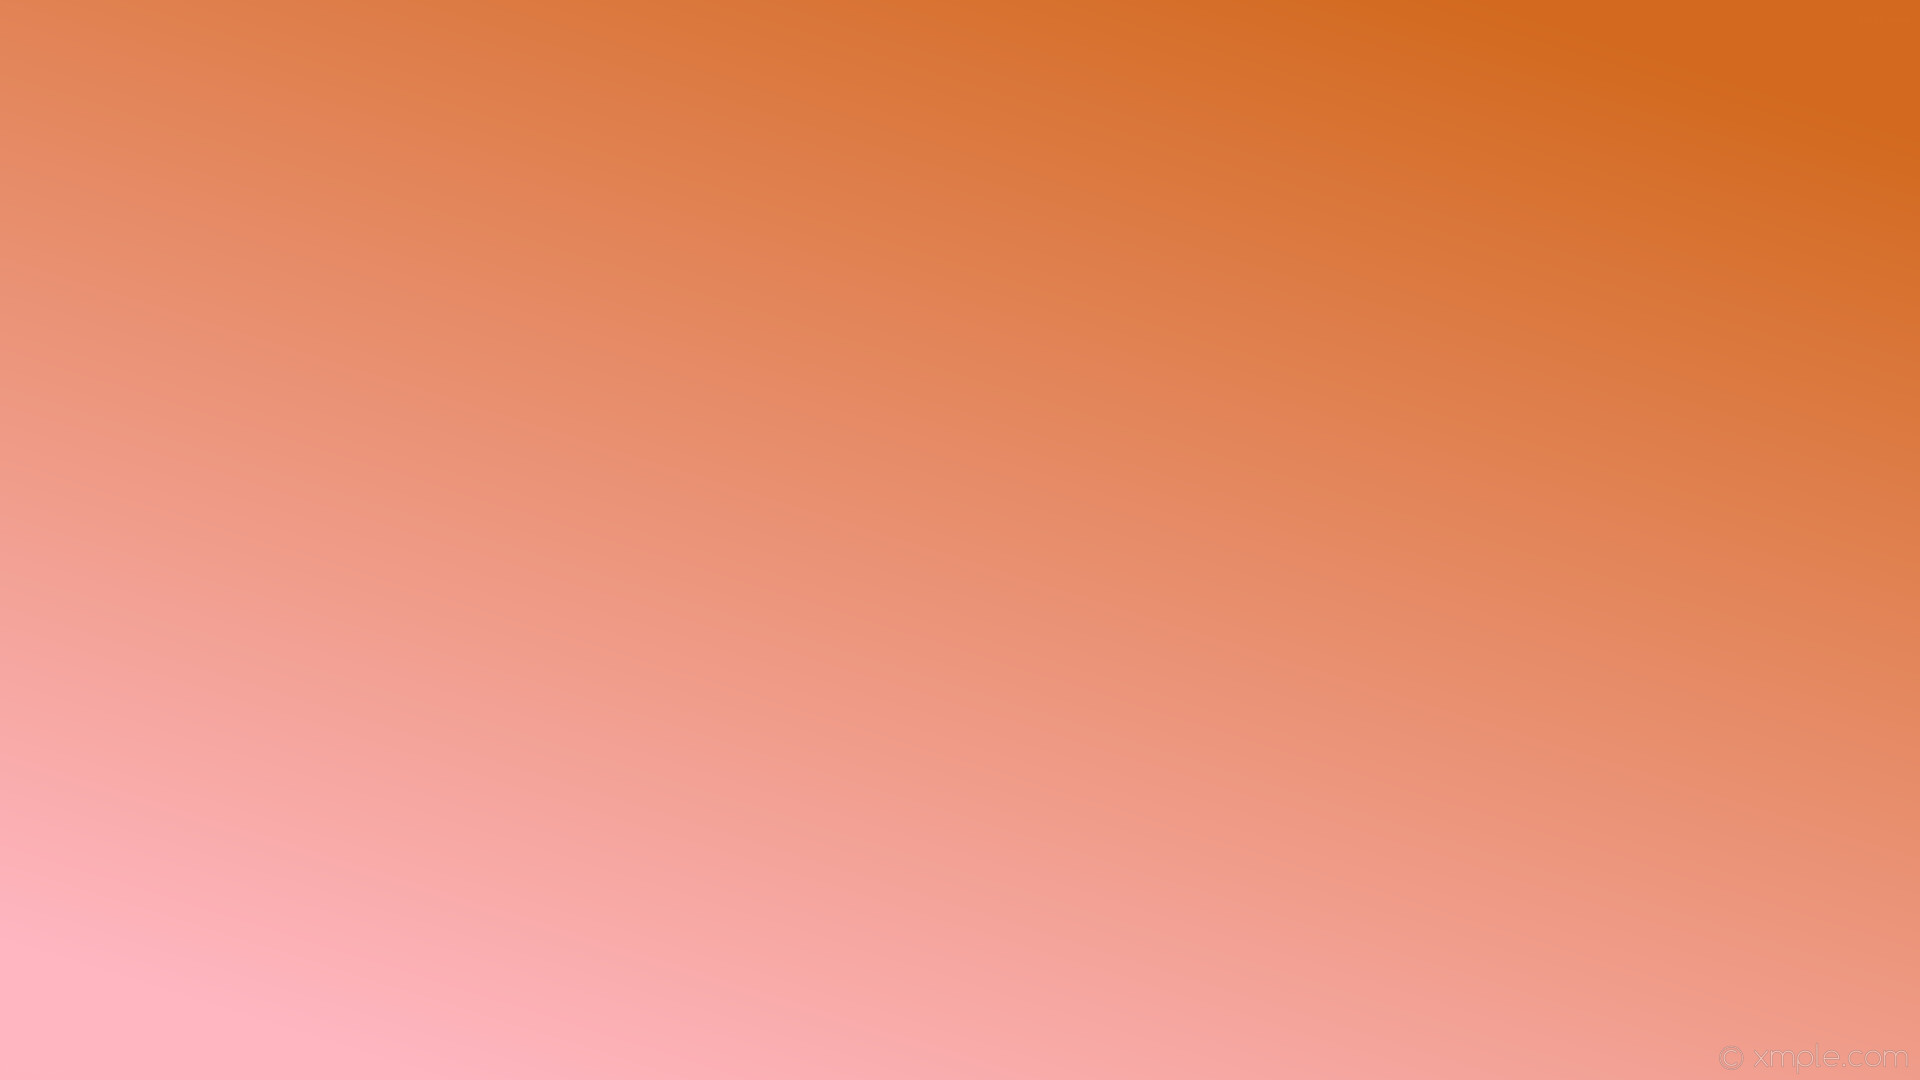 1920x1080 wallpaper brown gradient pink linear light pink chocolate #ffb6c1 #d2691e  225Â°